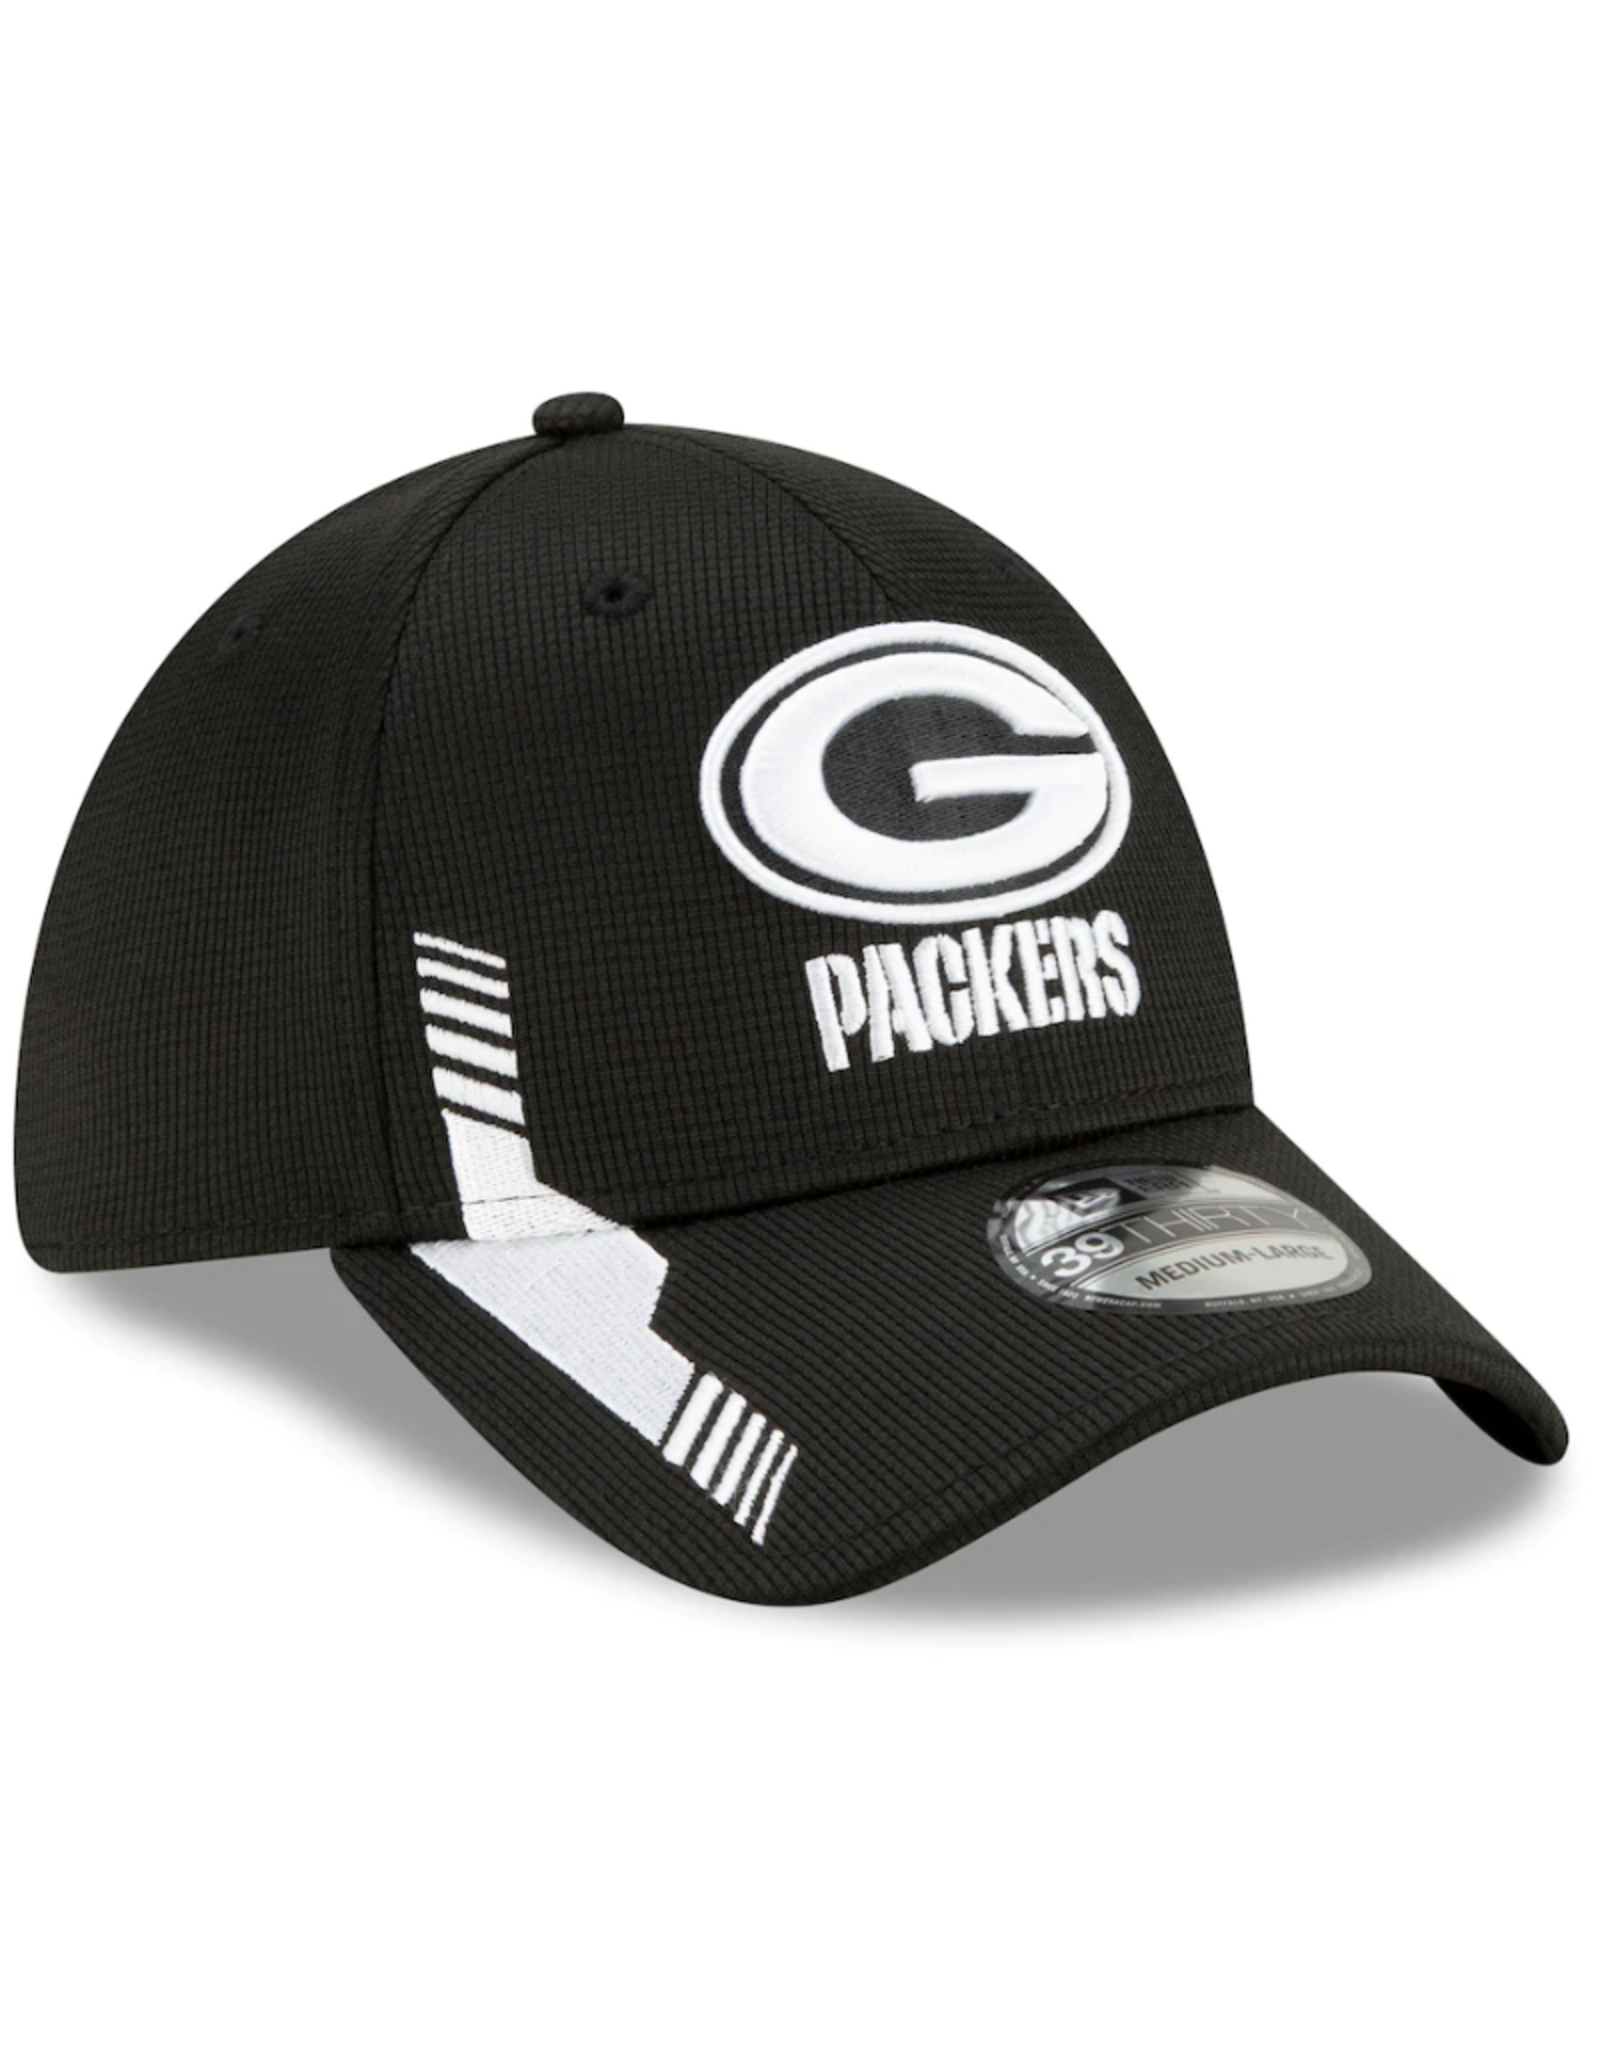 New Era Men's '21 39THIRTY Sideline Home Hat Green Bay Packers Black/White